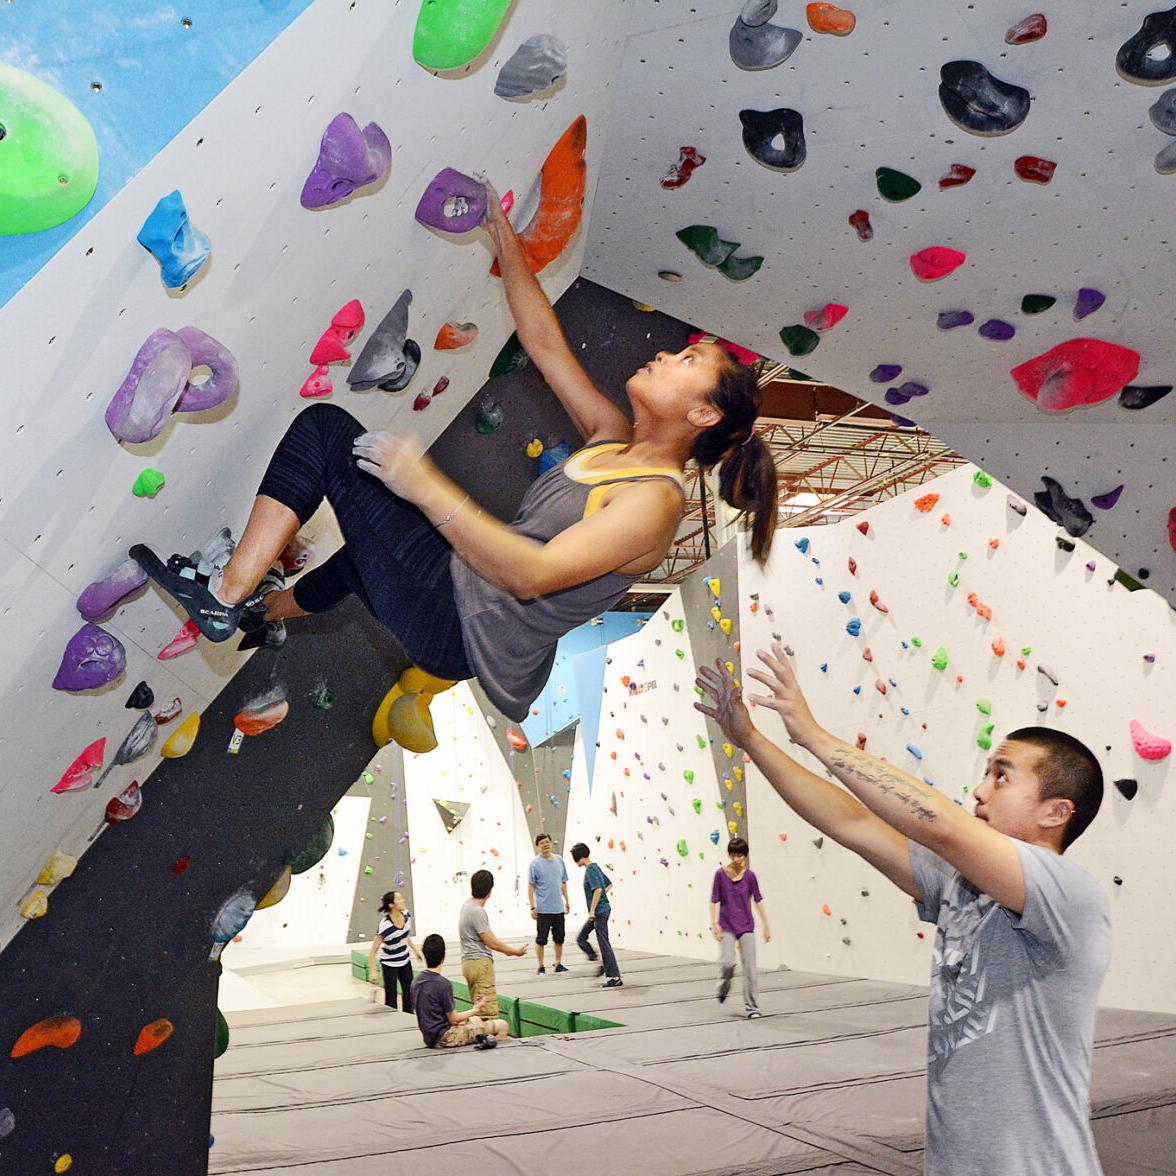 Hub Climbing Markham: Indoor Rock Climbing Gym, Bouldering